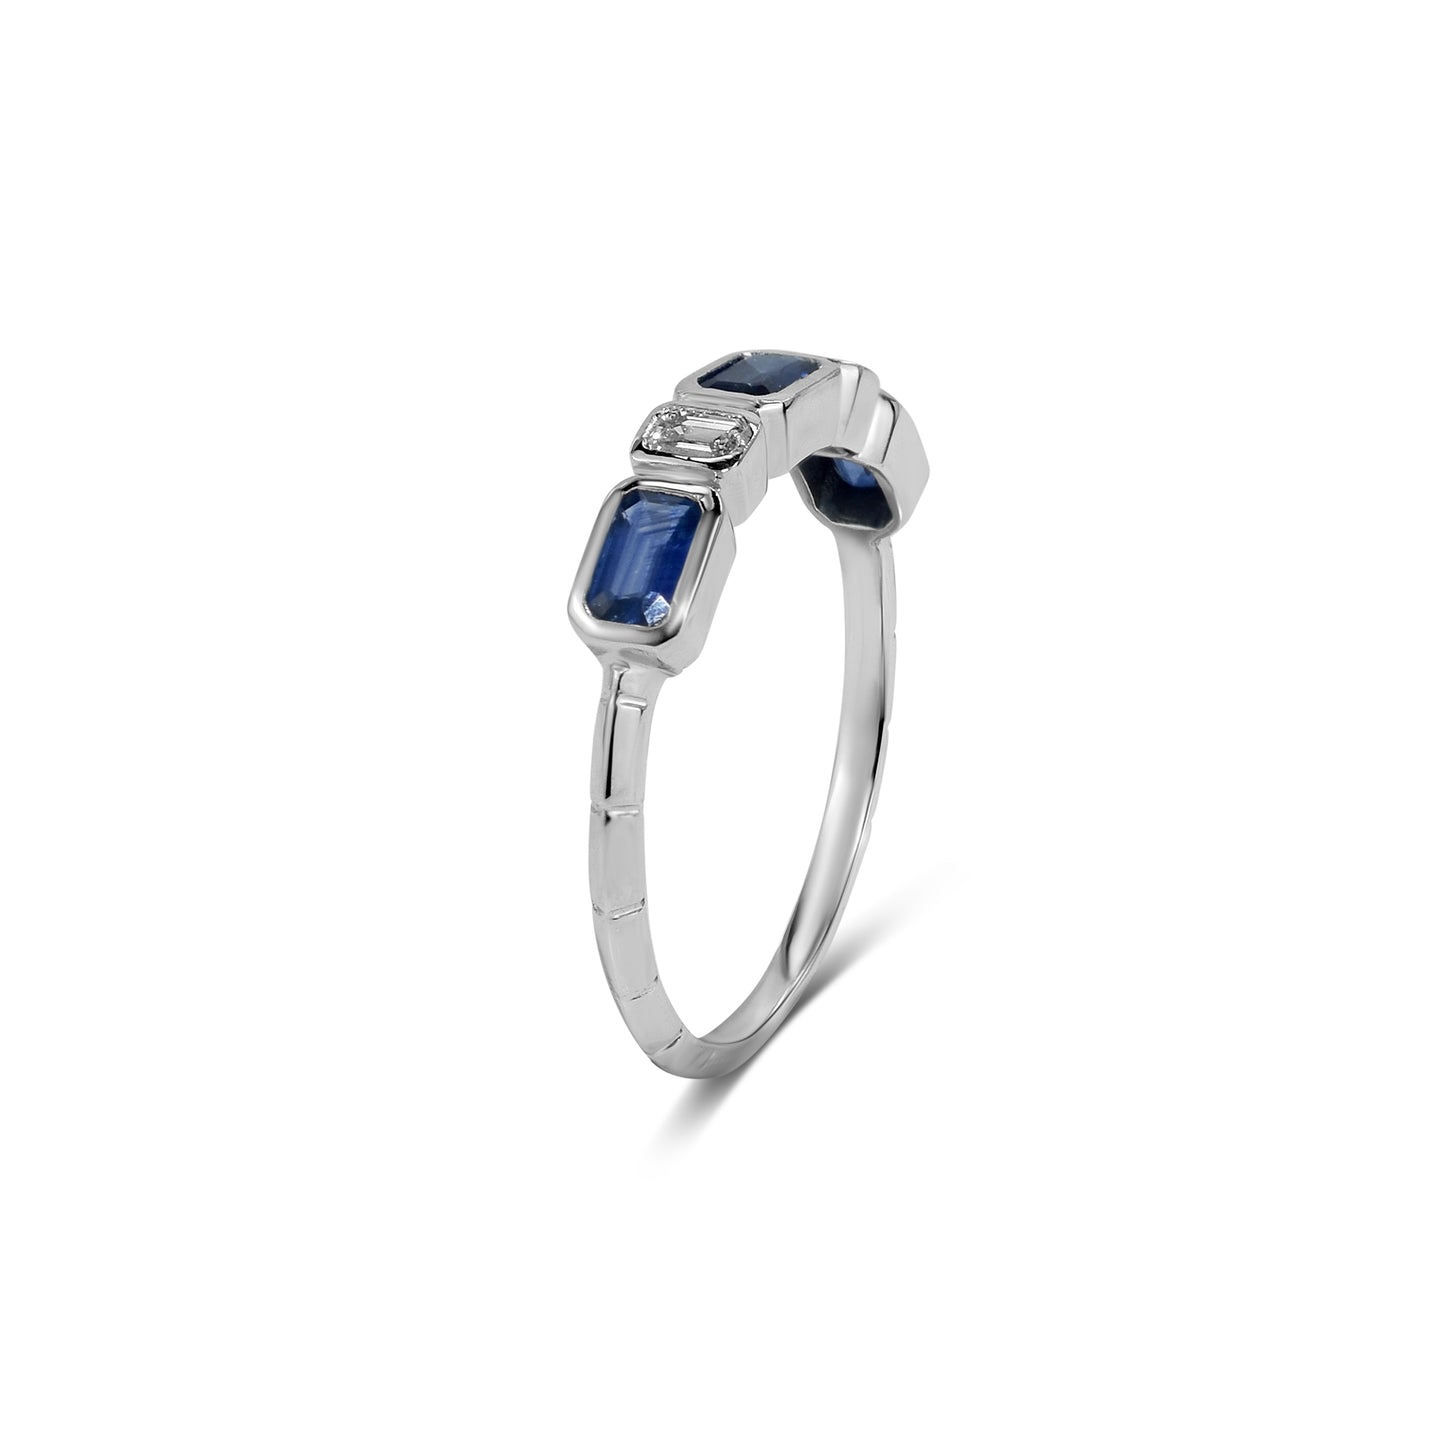 18k White Gold Sapphire Emerald Cut Diamond Baguette Ring Size 7